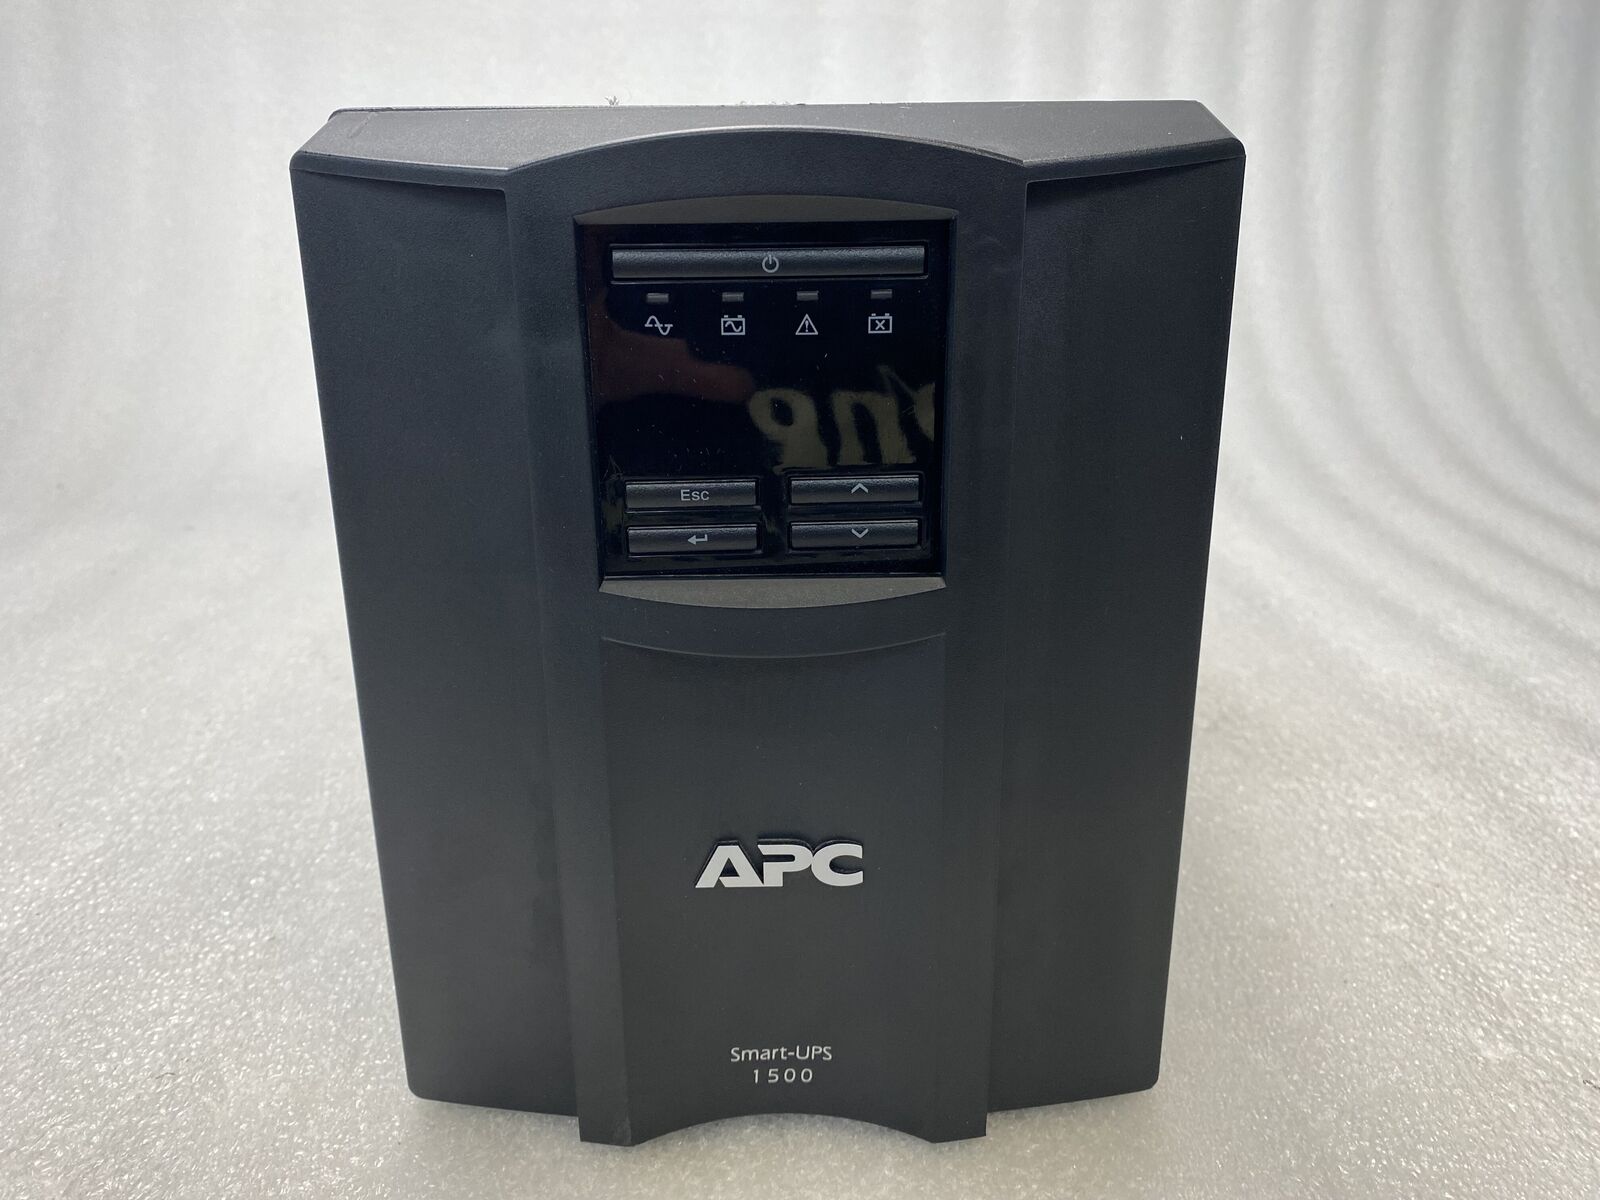 APC Smart UPS 1500 SMT1500 1500VA 120 UPS Battery Backup UPS NO BATTERY - GOOD